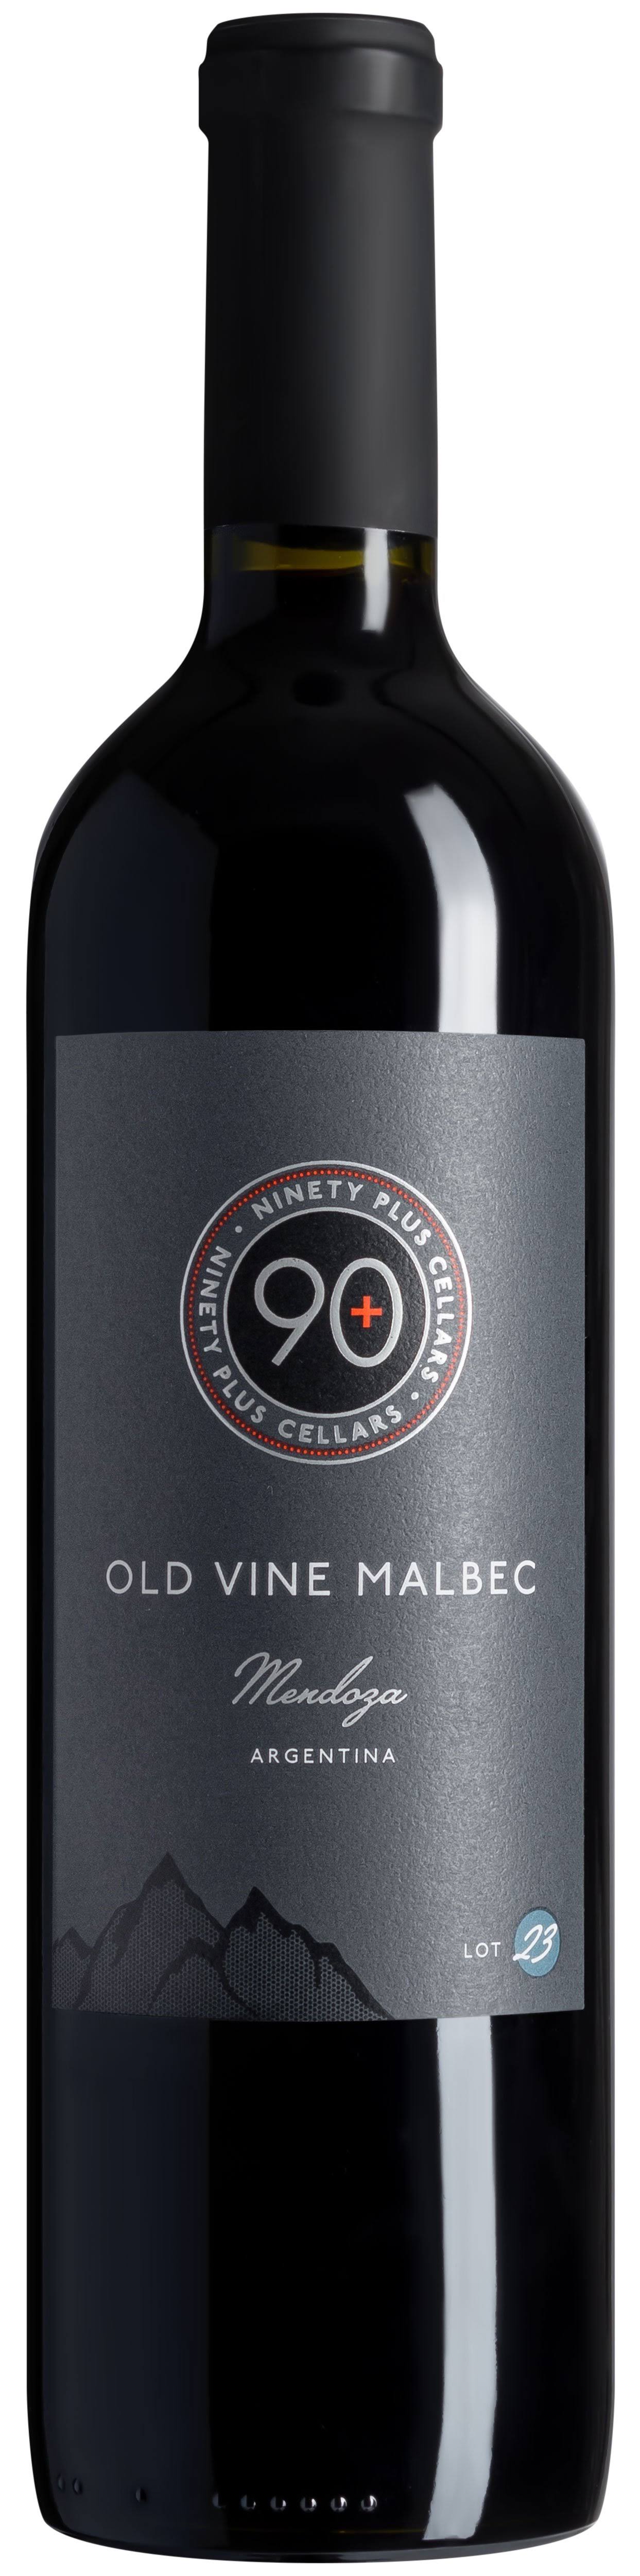 90+ Cellars Old Vine Malbec Lot 23 750 ml